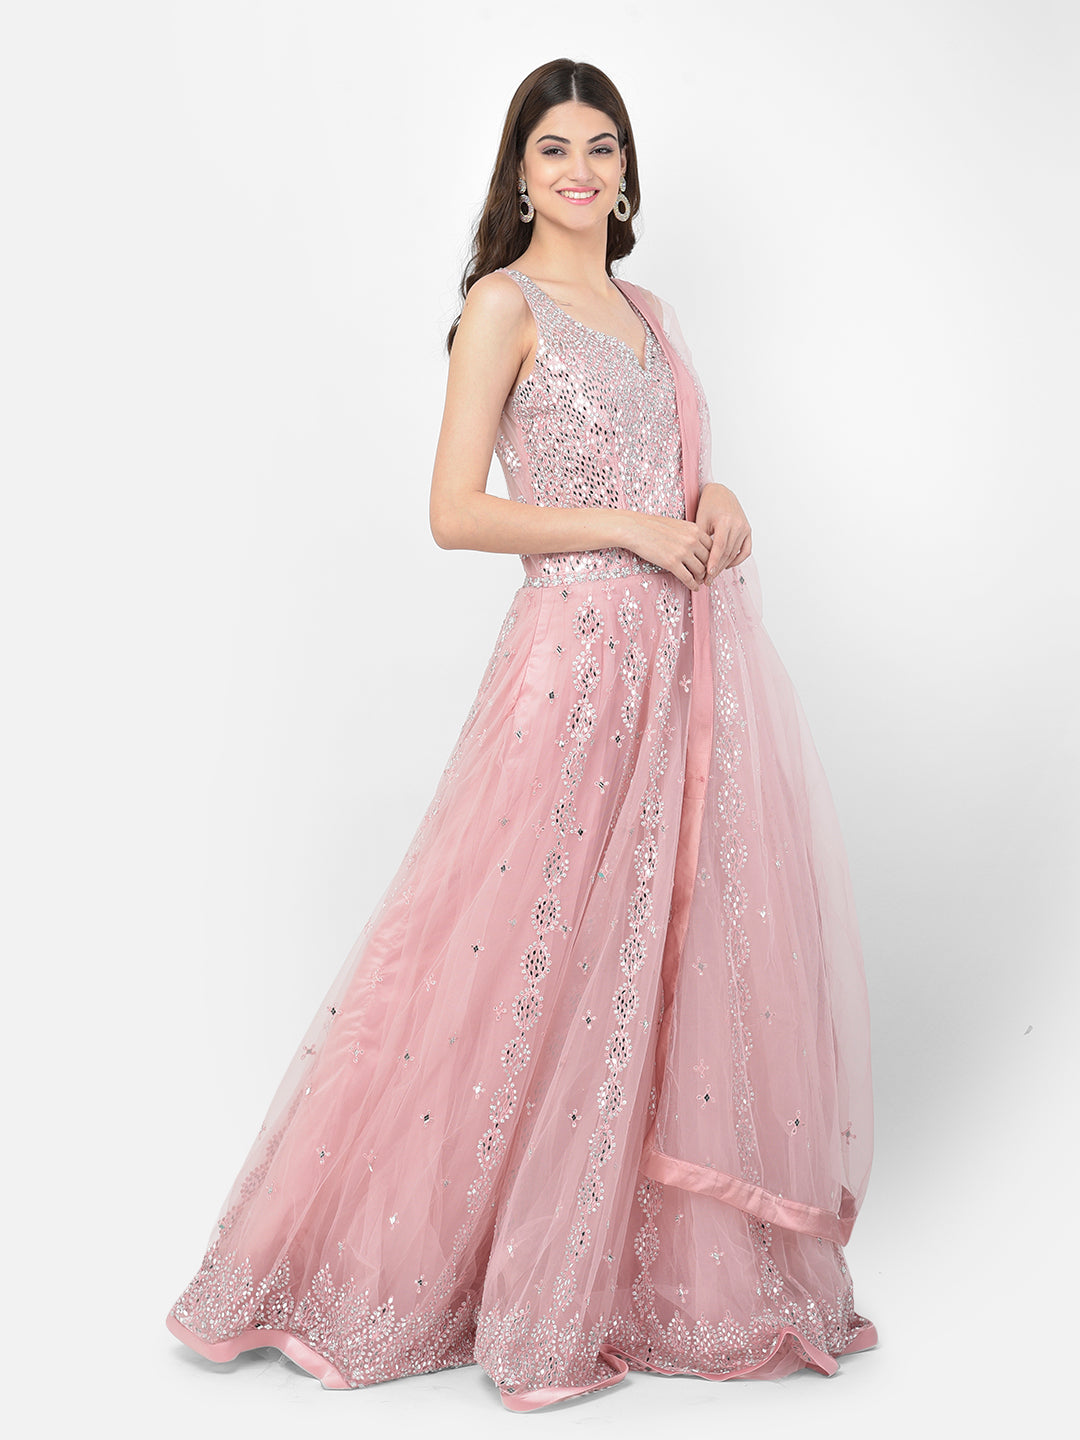 Neeru'S baby pink color nett fabric gown